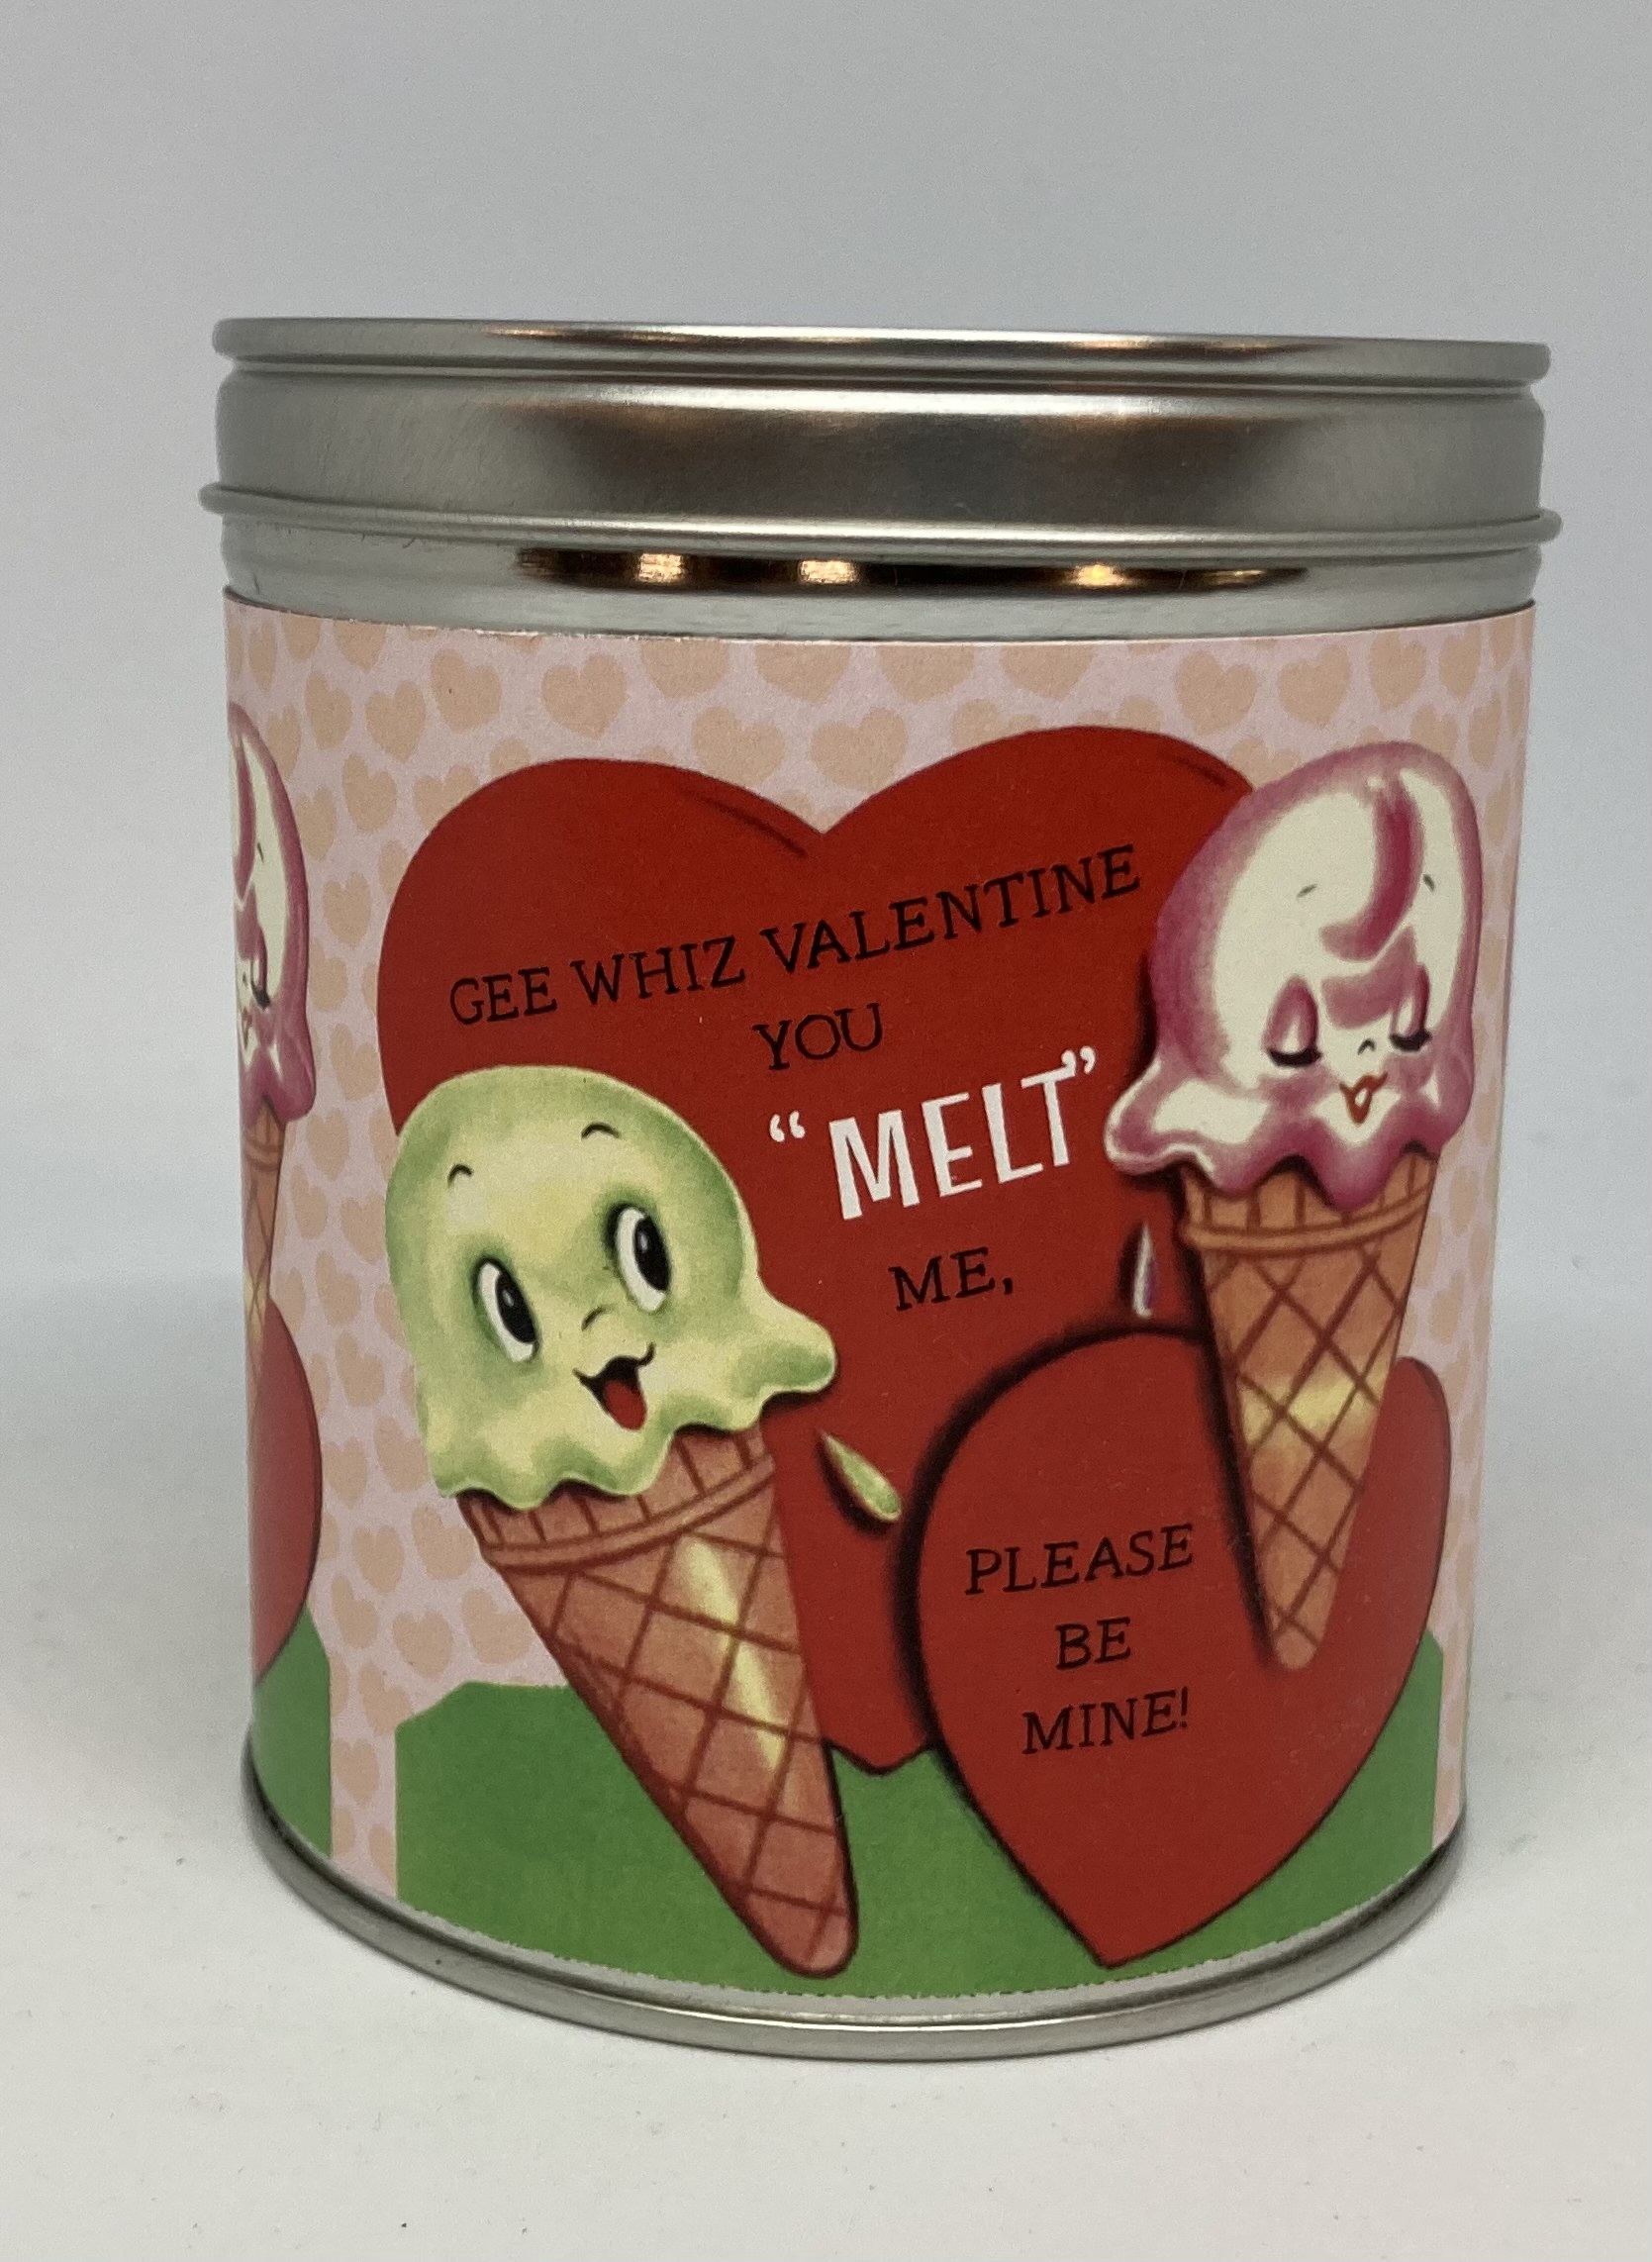 Vintage Valentine Candle You MELT me - The General Store Tallulah